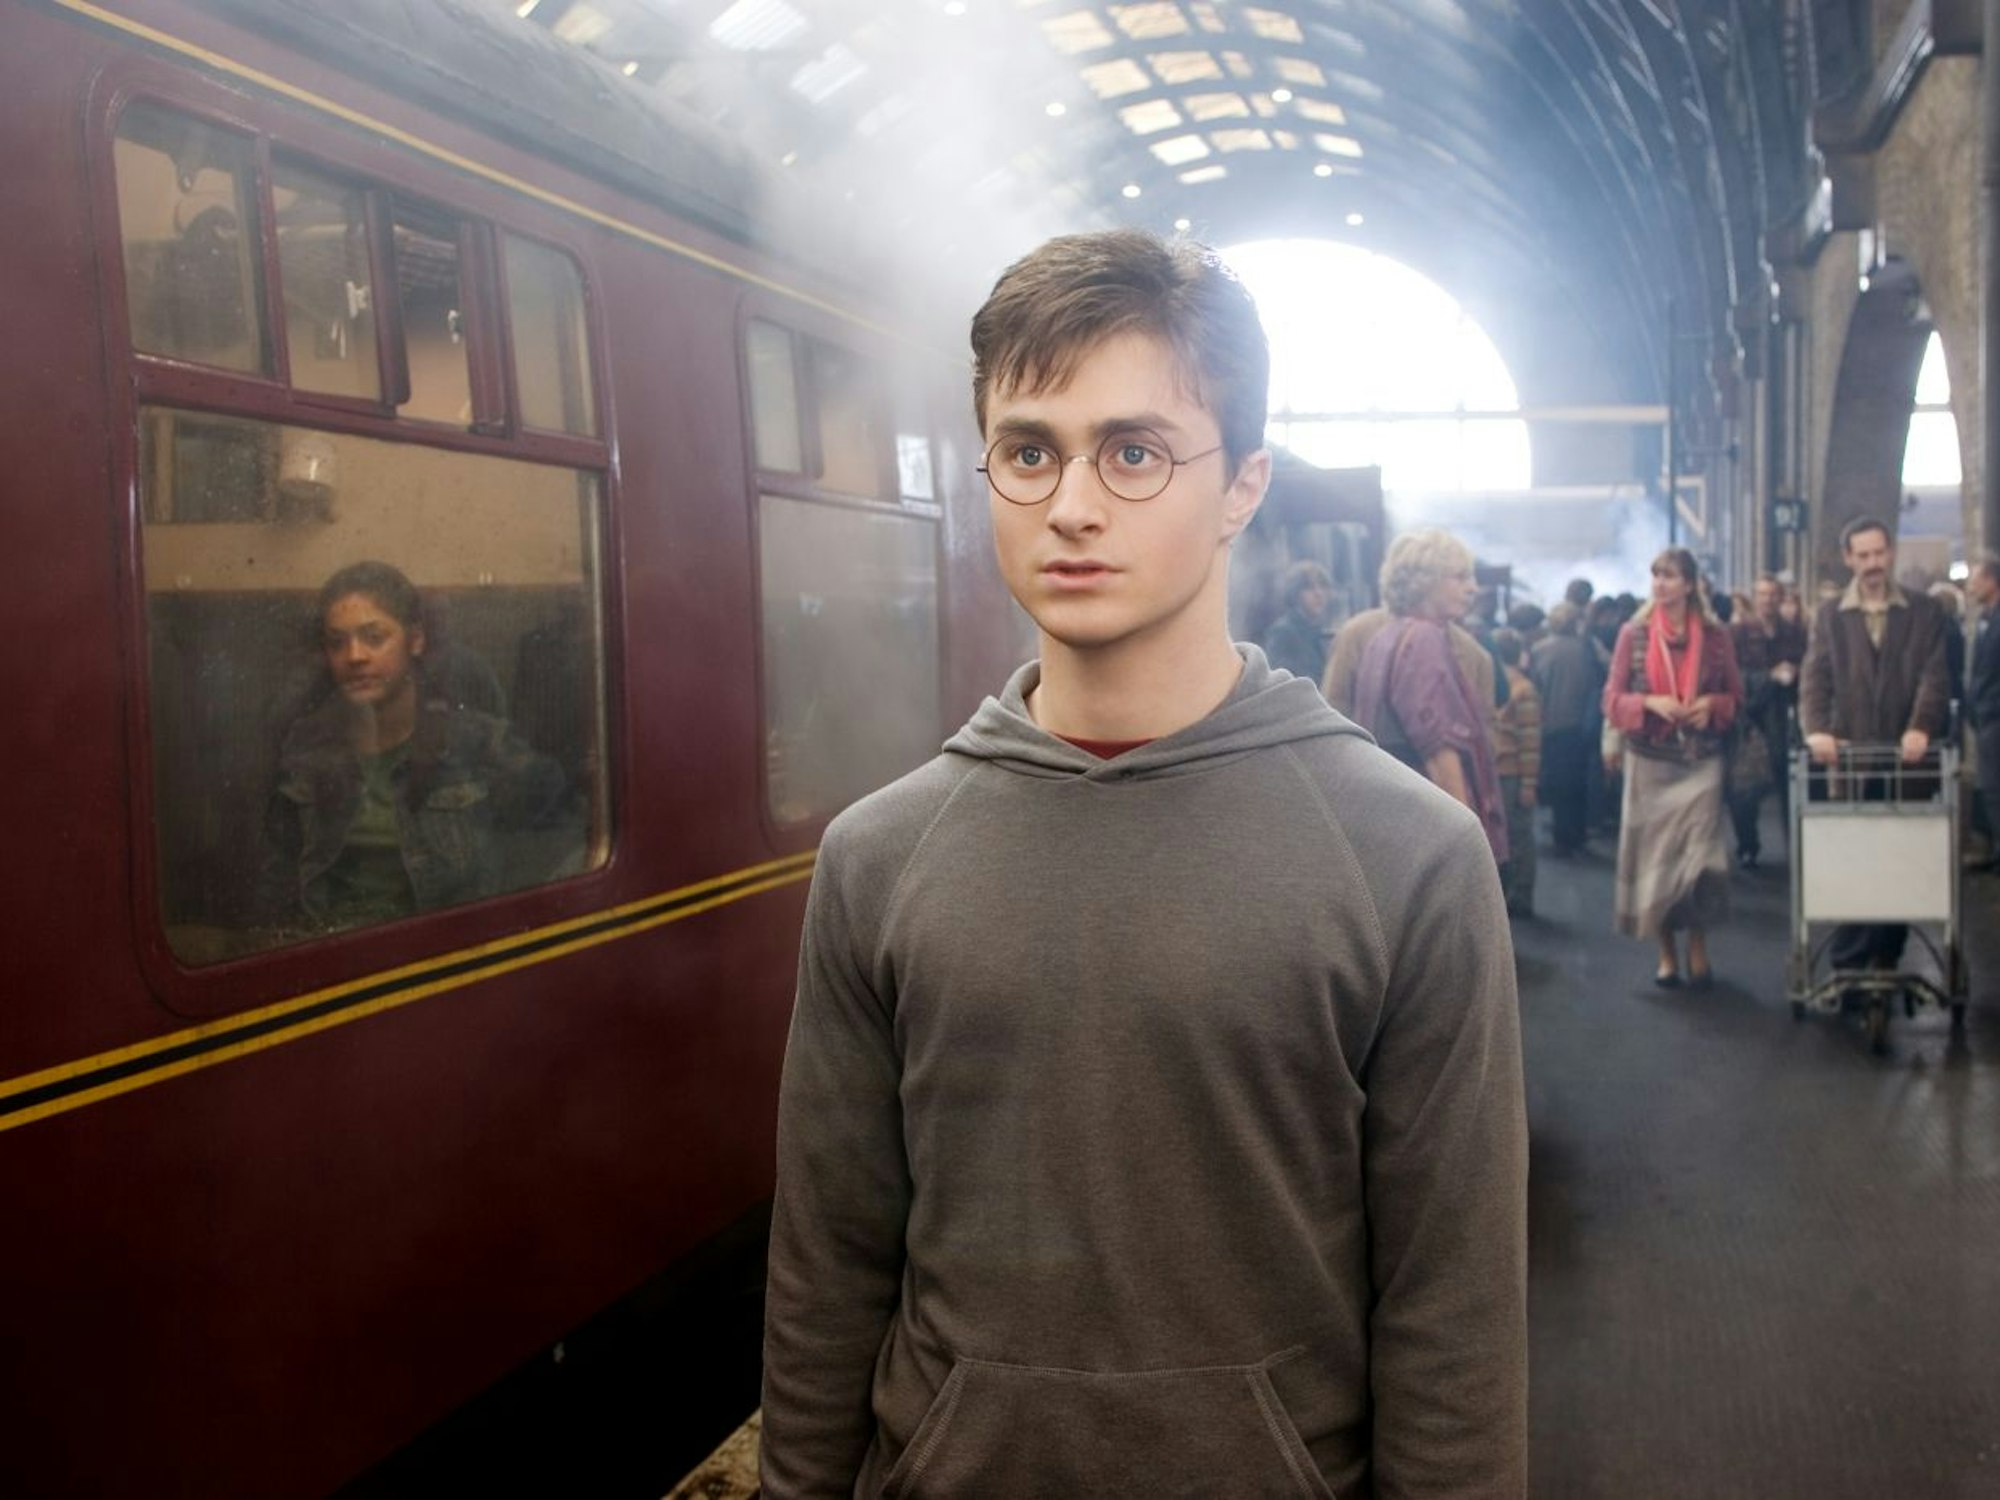 Harry Potter (Daniel Radcliffe)